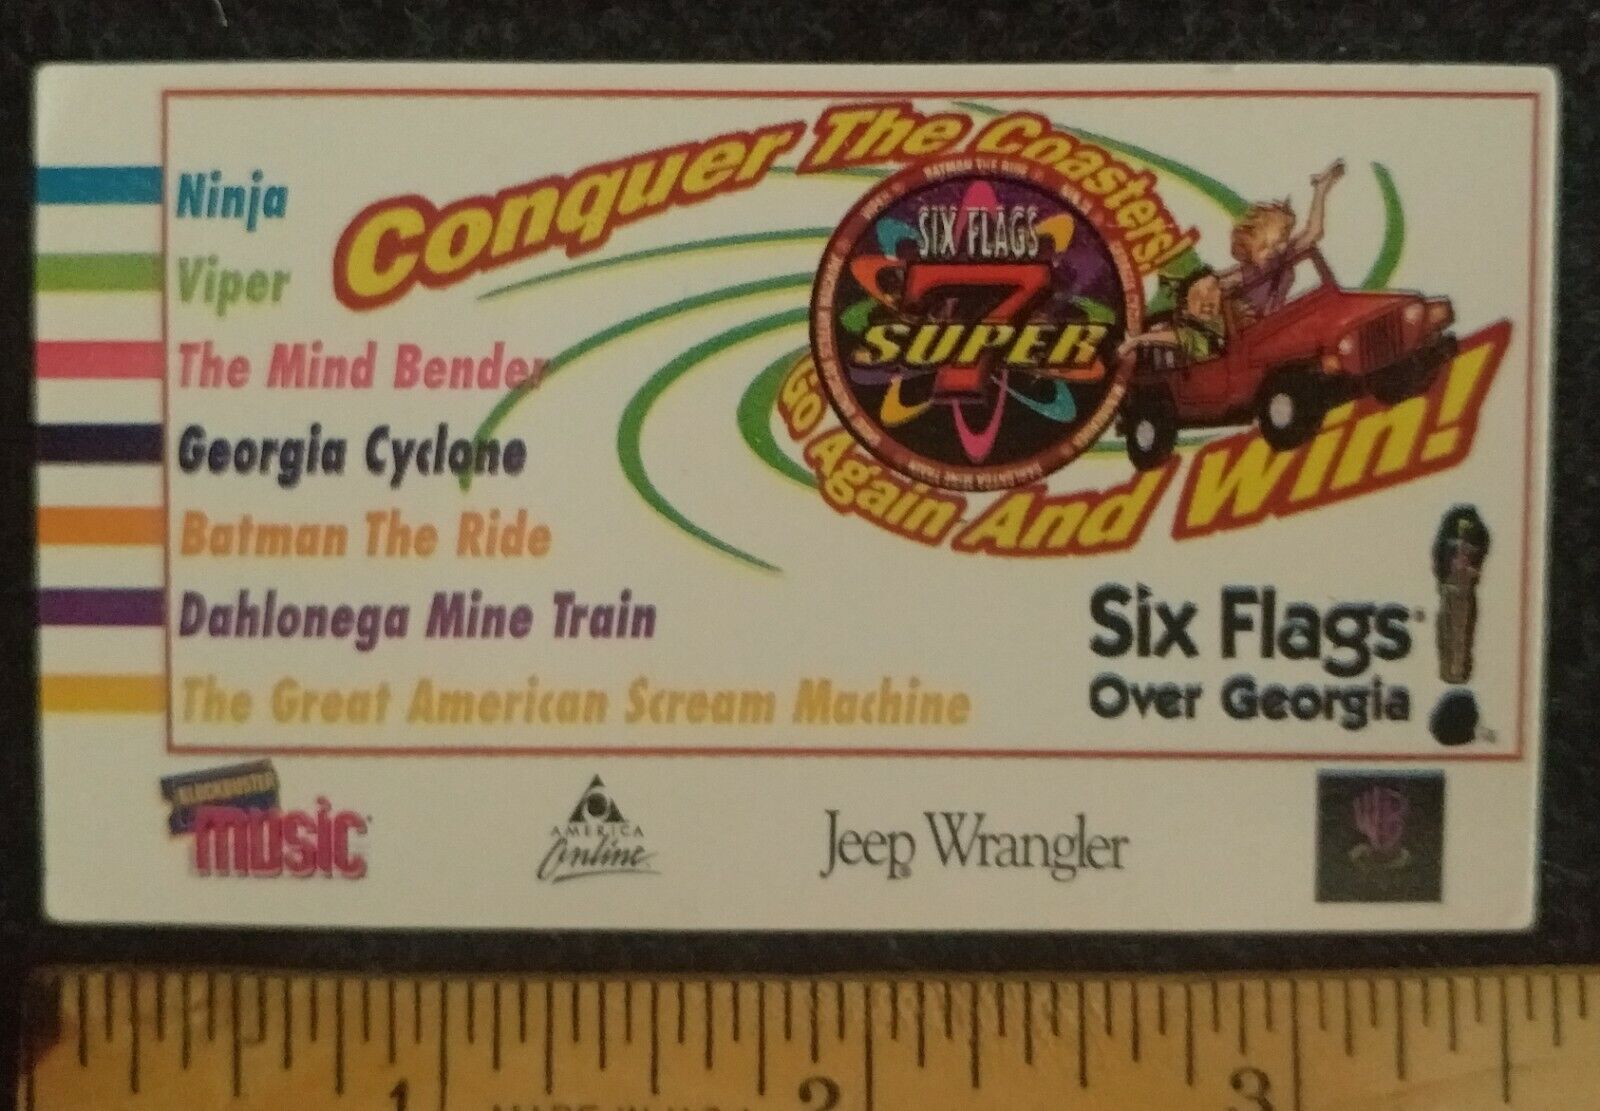 Six Flags Over Georgia Roller Coaster Super 7 Contest Ninja Viper Cyclone Jeep